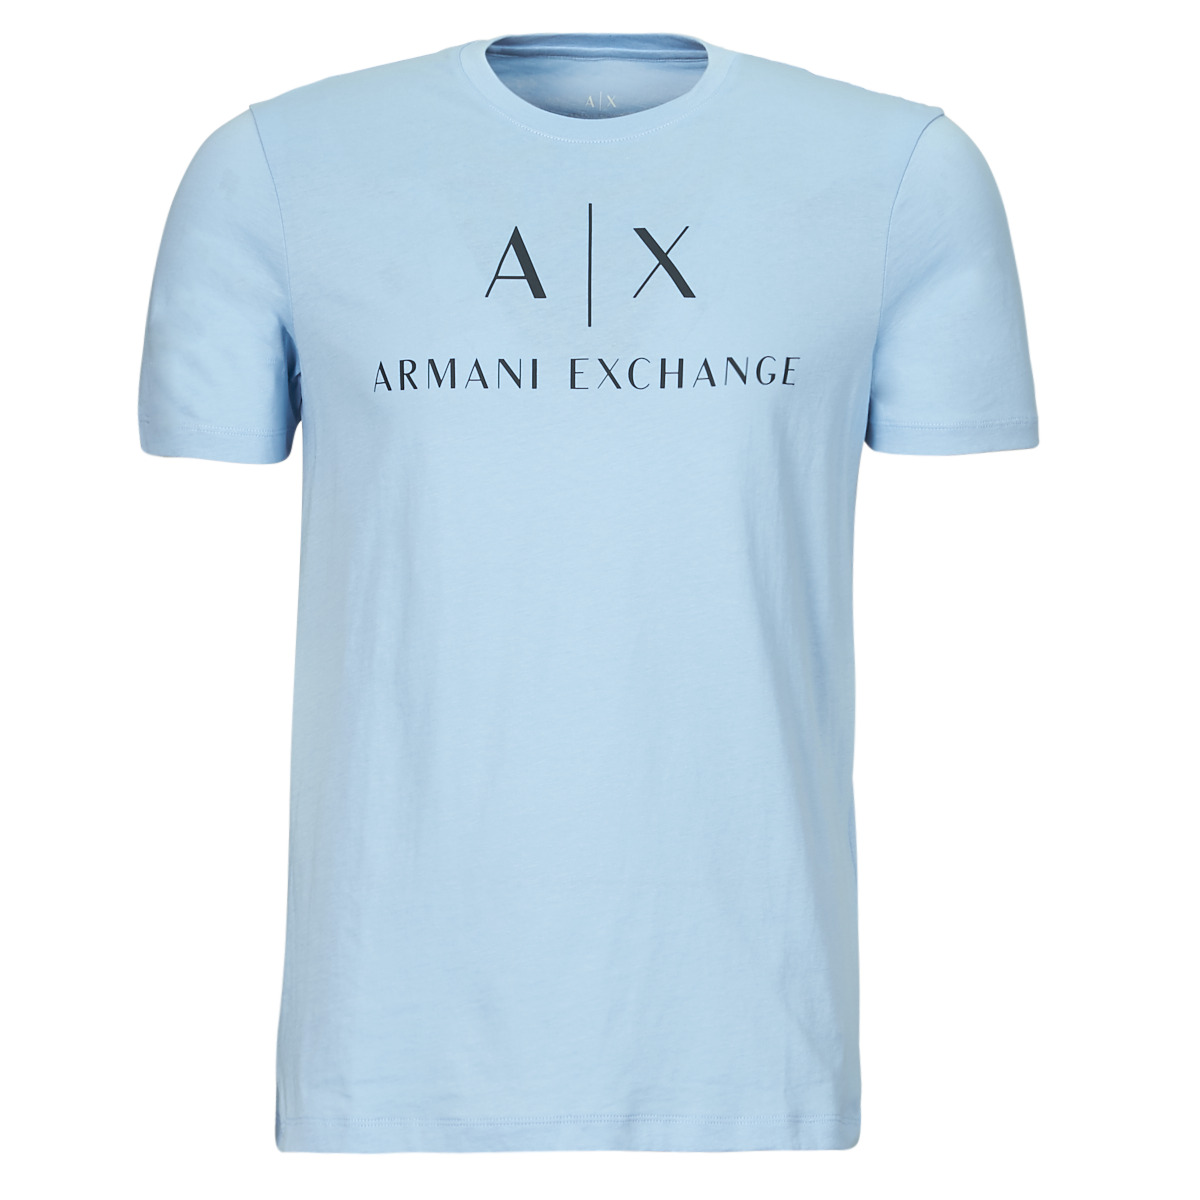 Oblačila Moški Majice s kratkimi rokavi Armani Exchange 8NZTCJ Modra / Nebeško modra